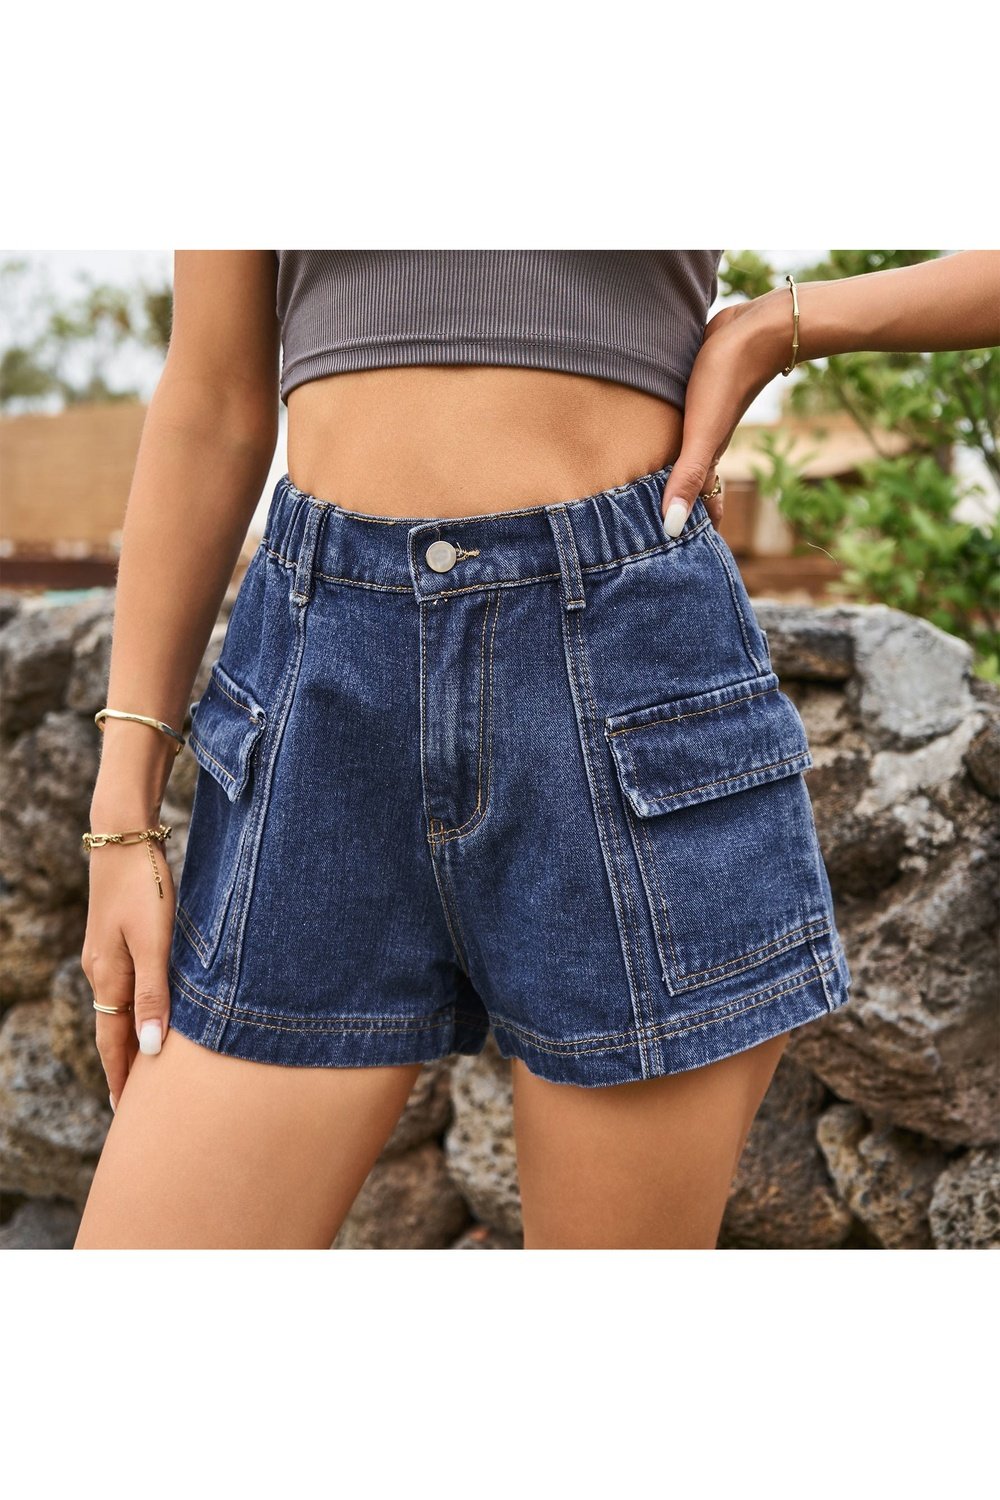 High-Waist Denim Shorts with Pockets - Denim Shorts - FITGGINS